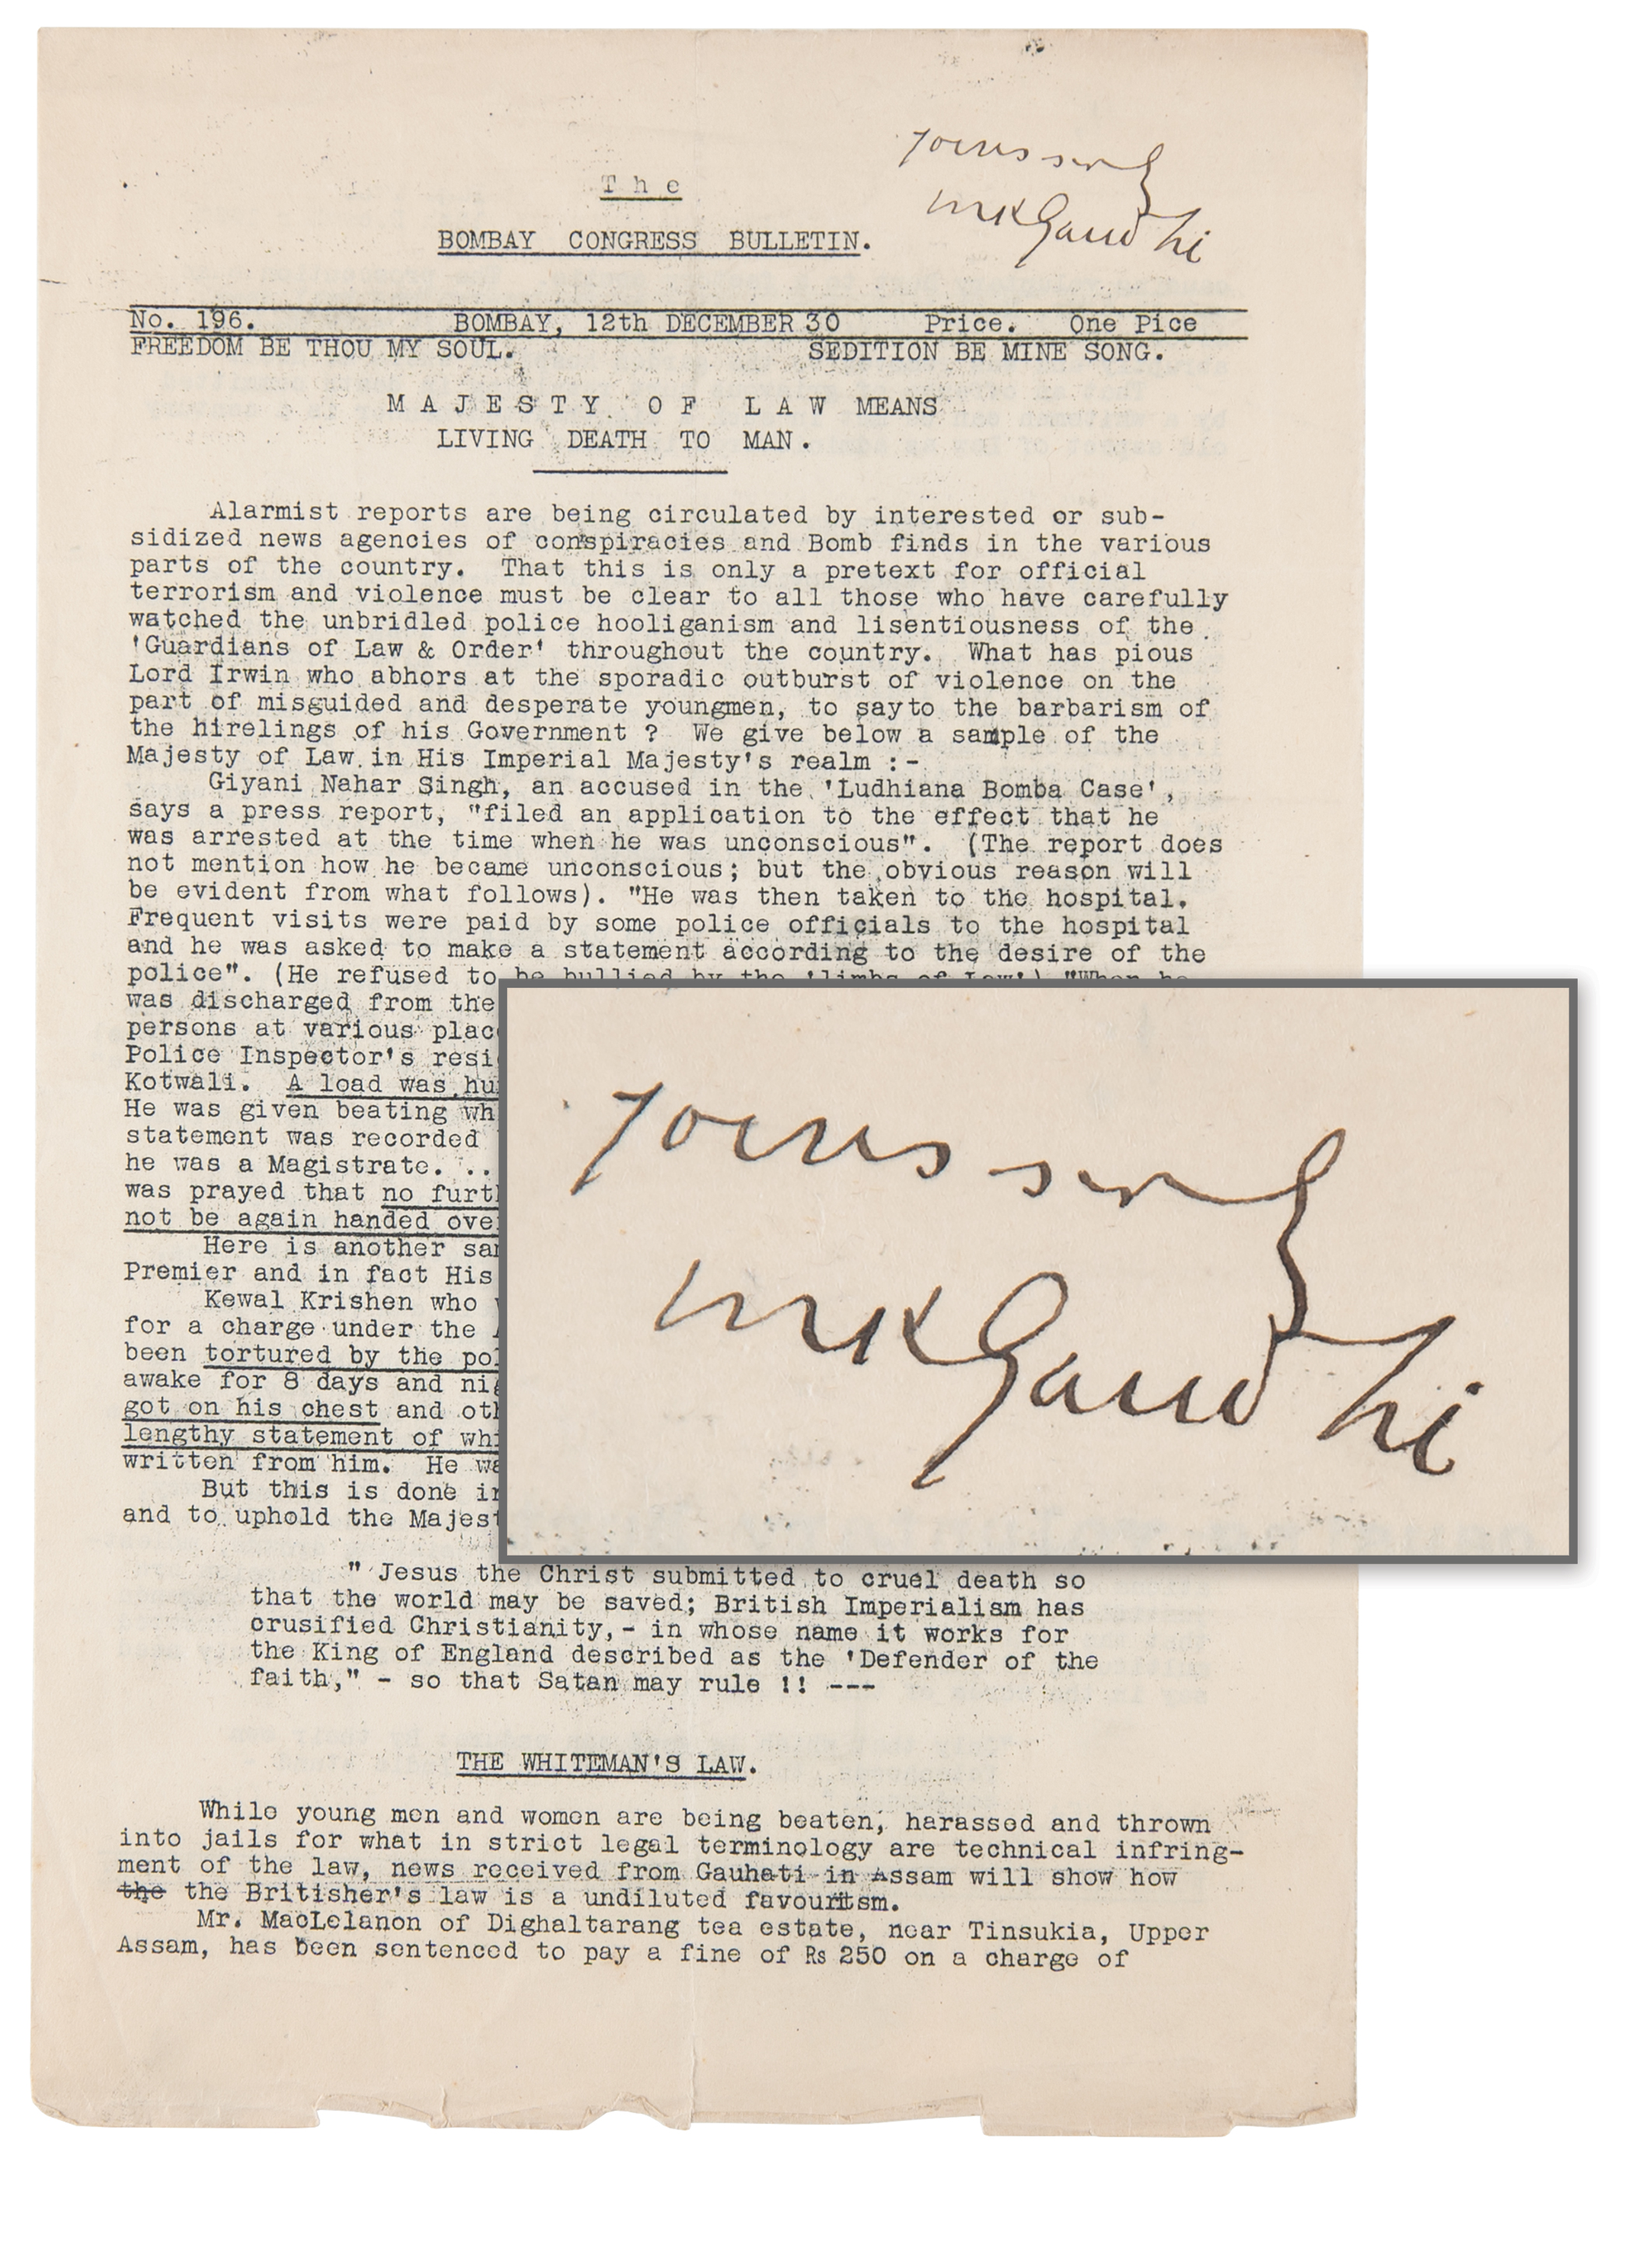 Lot #82 Mohandas Gandhi Signed 'Bombay Congress Bulletin' Circular (1930)